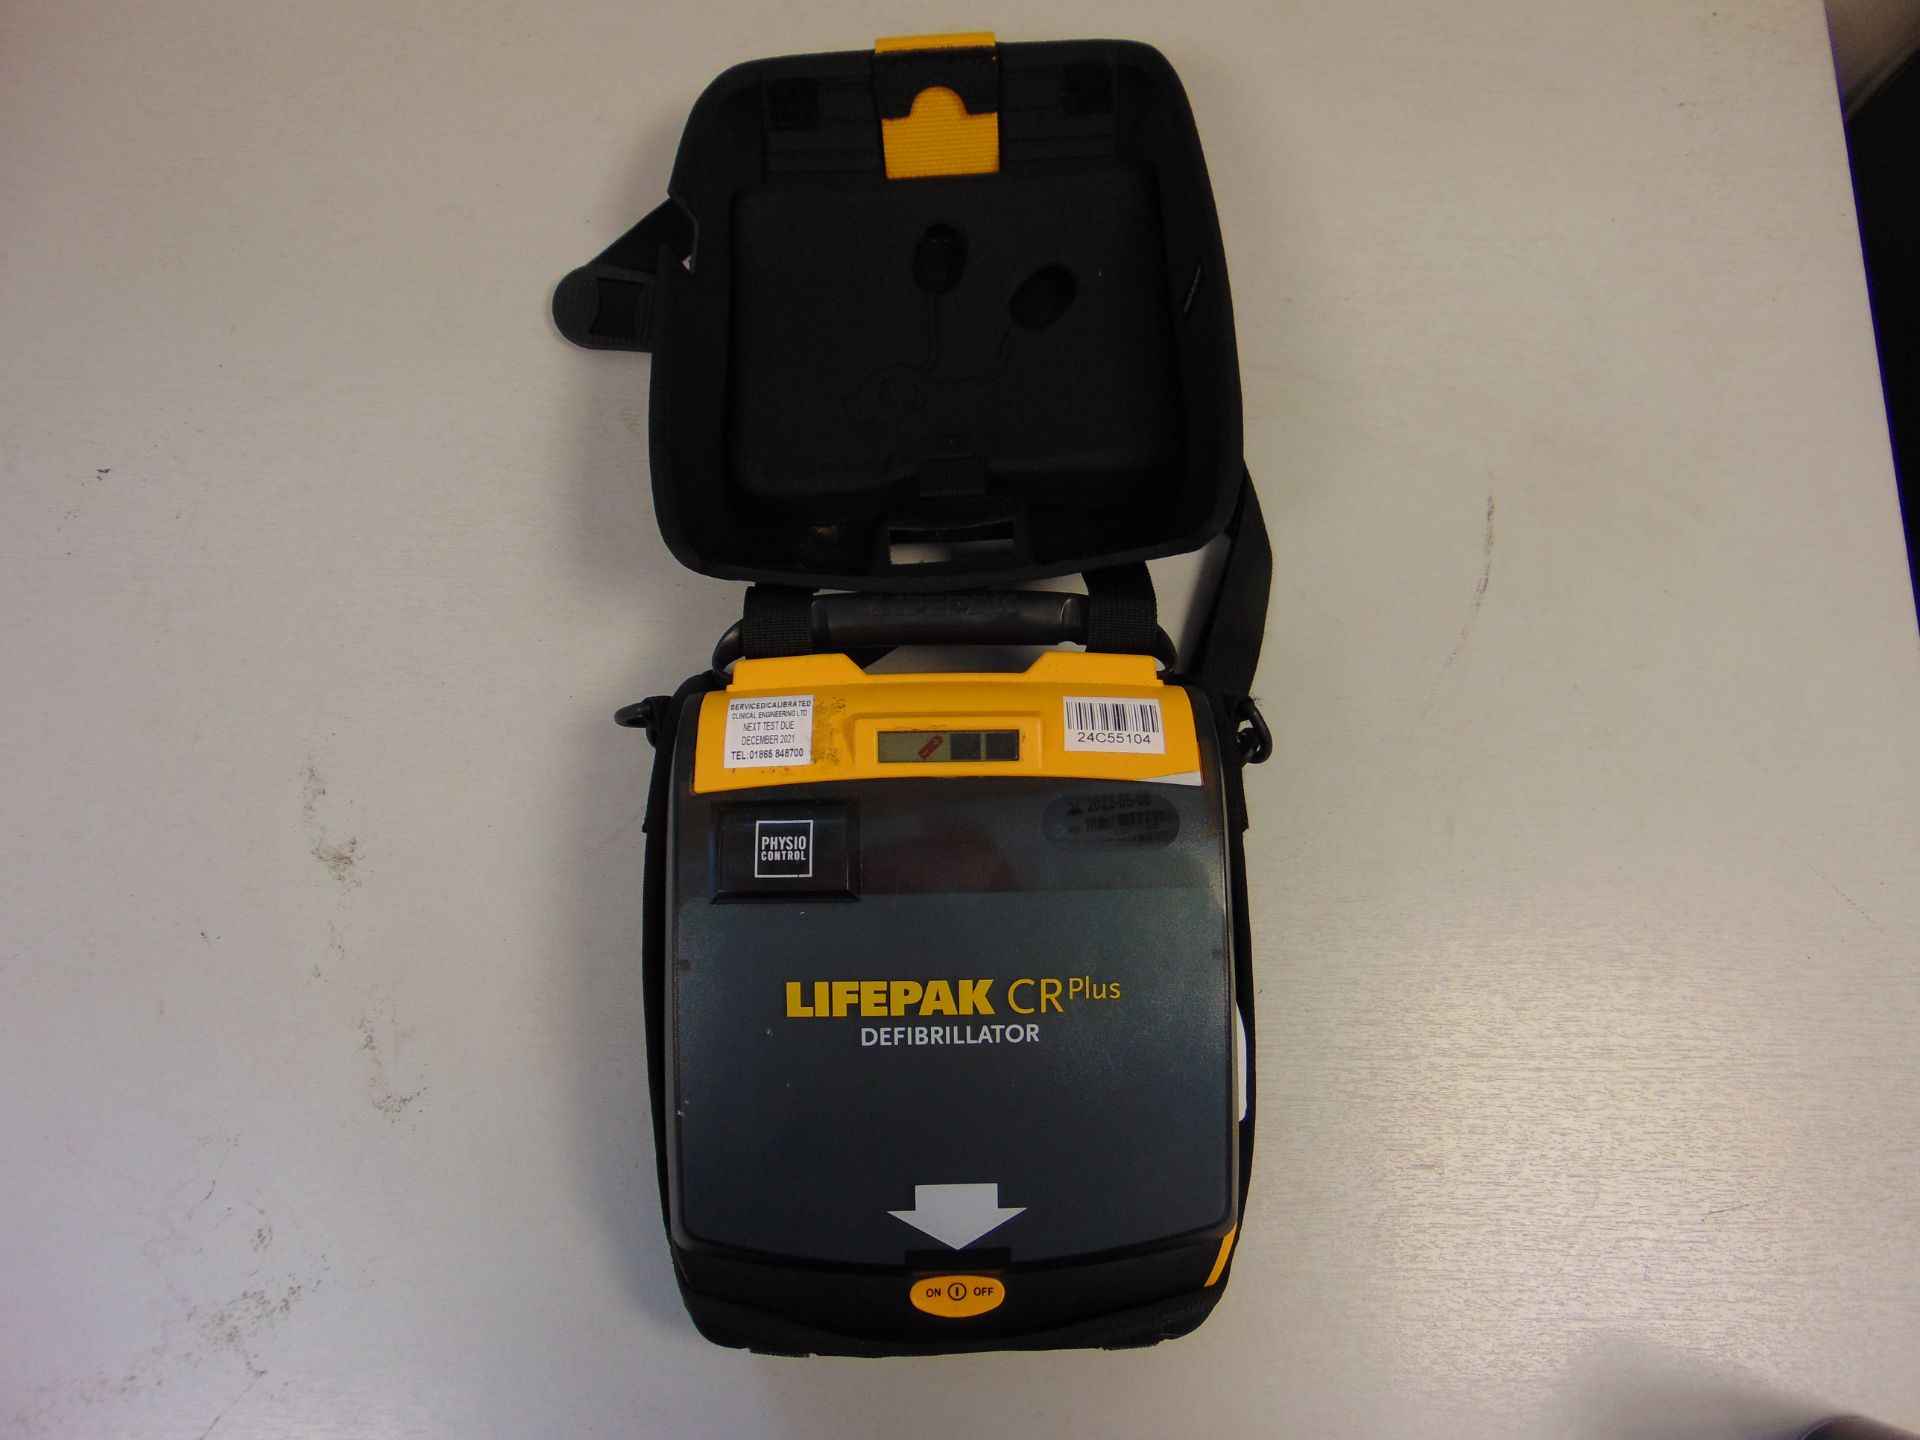 1 x Physio-Control Lifepak CR Plus Defibrillator Unit - Fully Automatic - Image 3 of 3